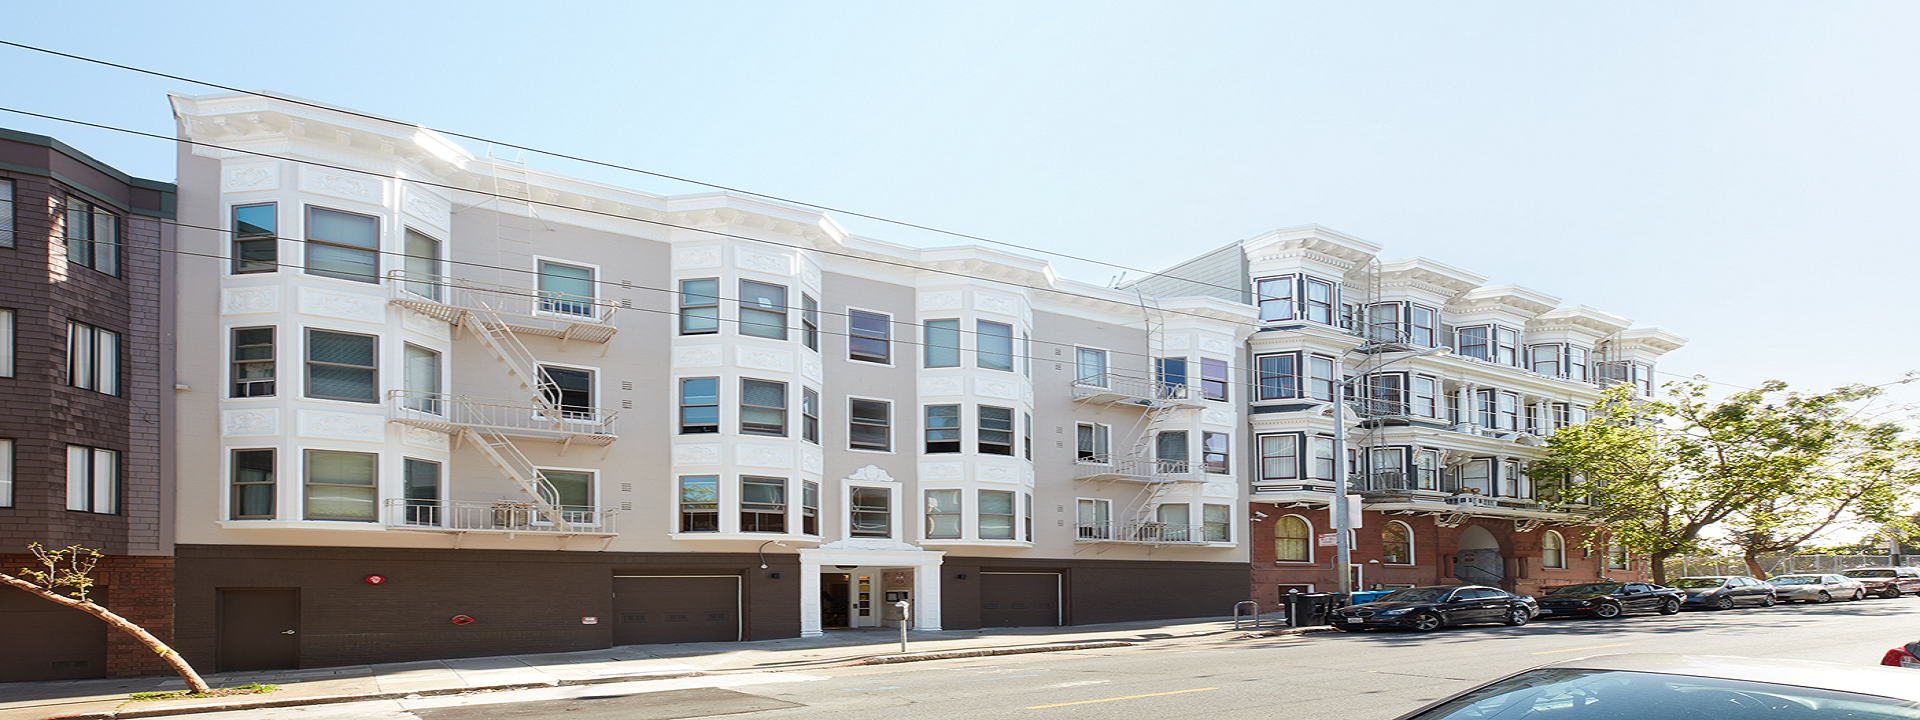 San Francisco Housing Authority